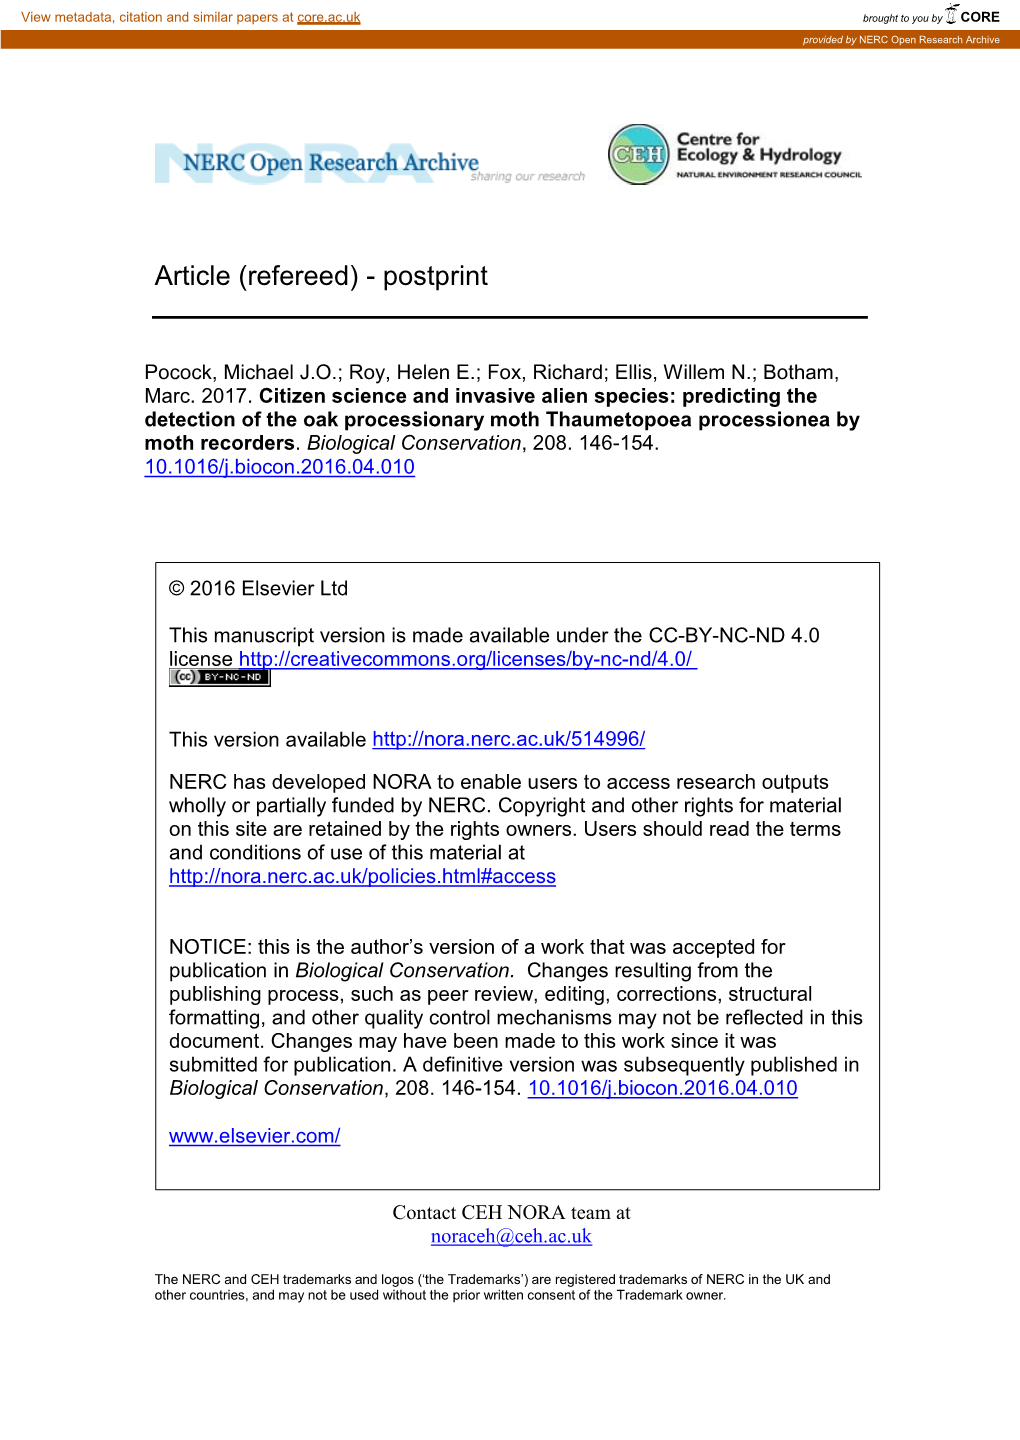 Article (Refereed) - Postprint